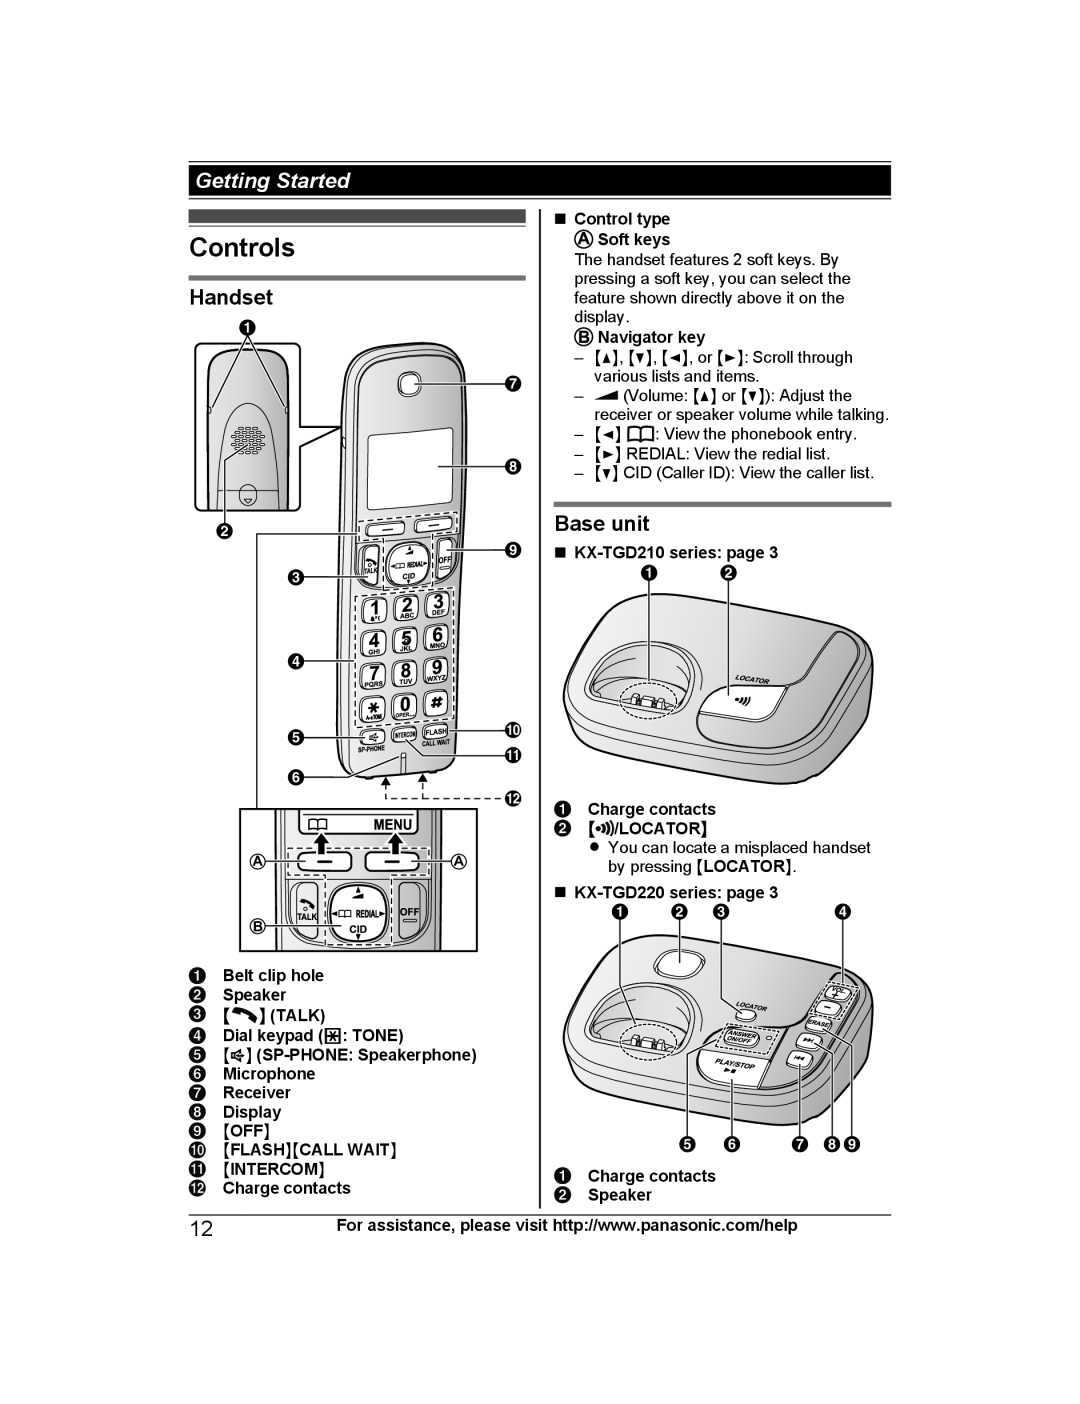 Panasonic KX-TG443SK Controls, Handset, Base unit, Getting Started, Belt clip hole Speaker MN TALK Dial keypad * TONE 